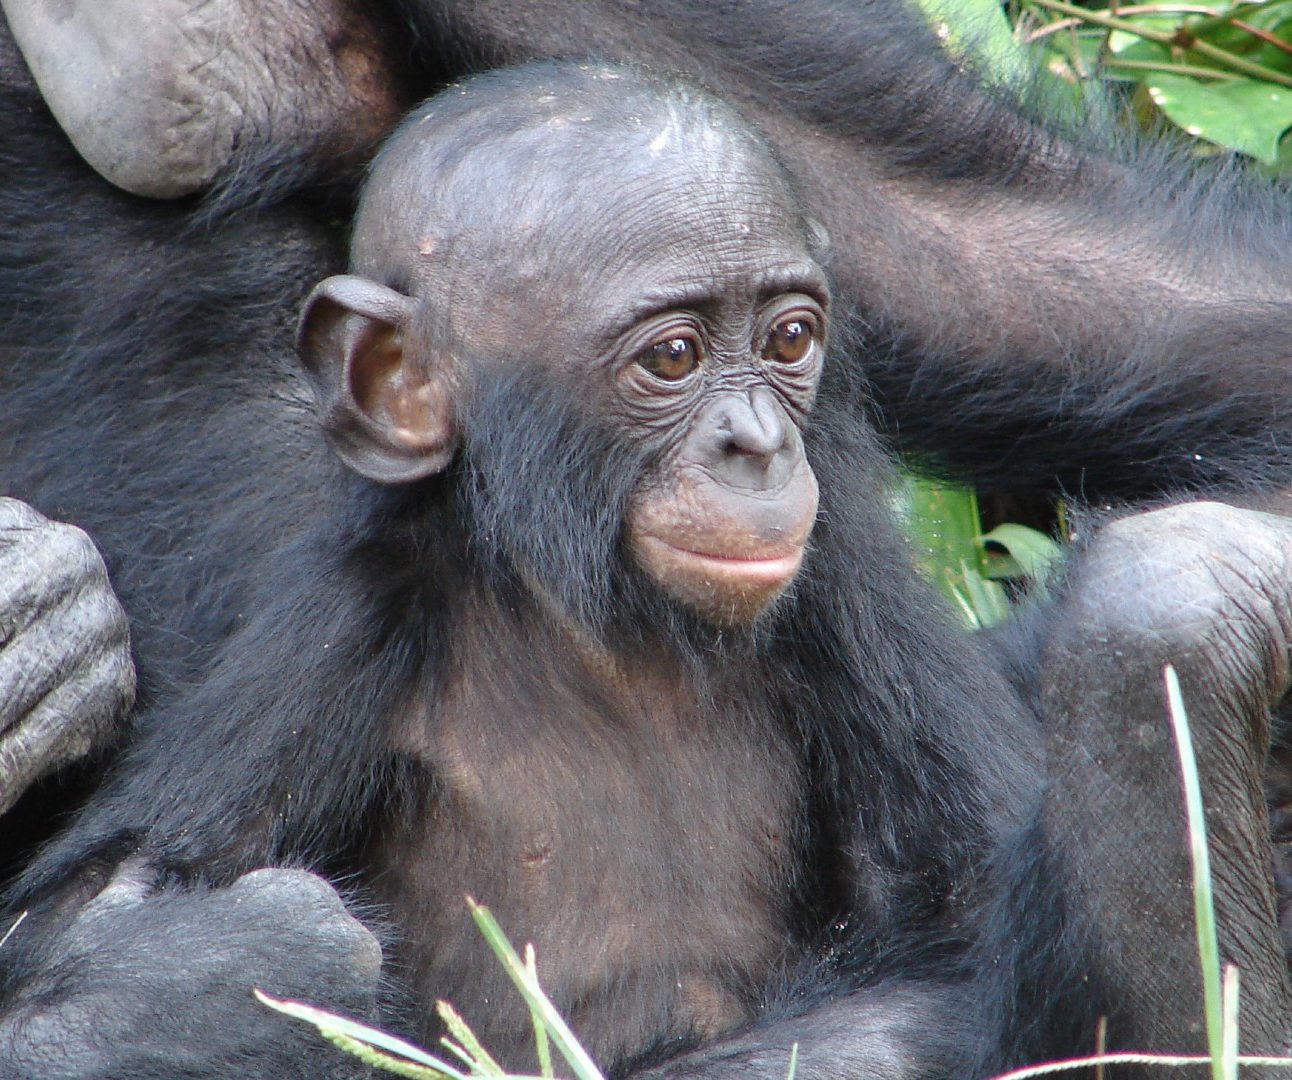 A portrait of a baby bonobo sitting amongst family members